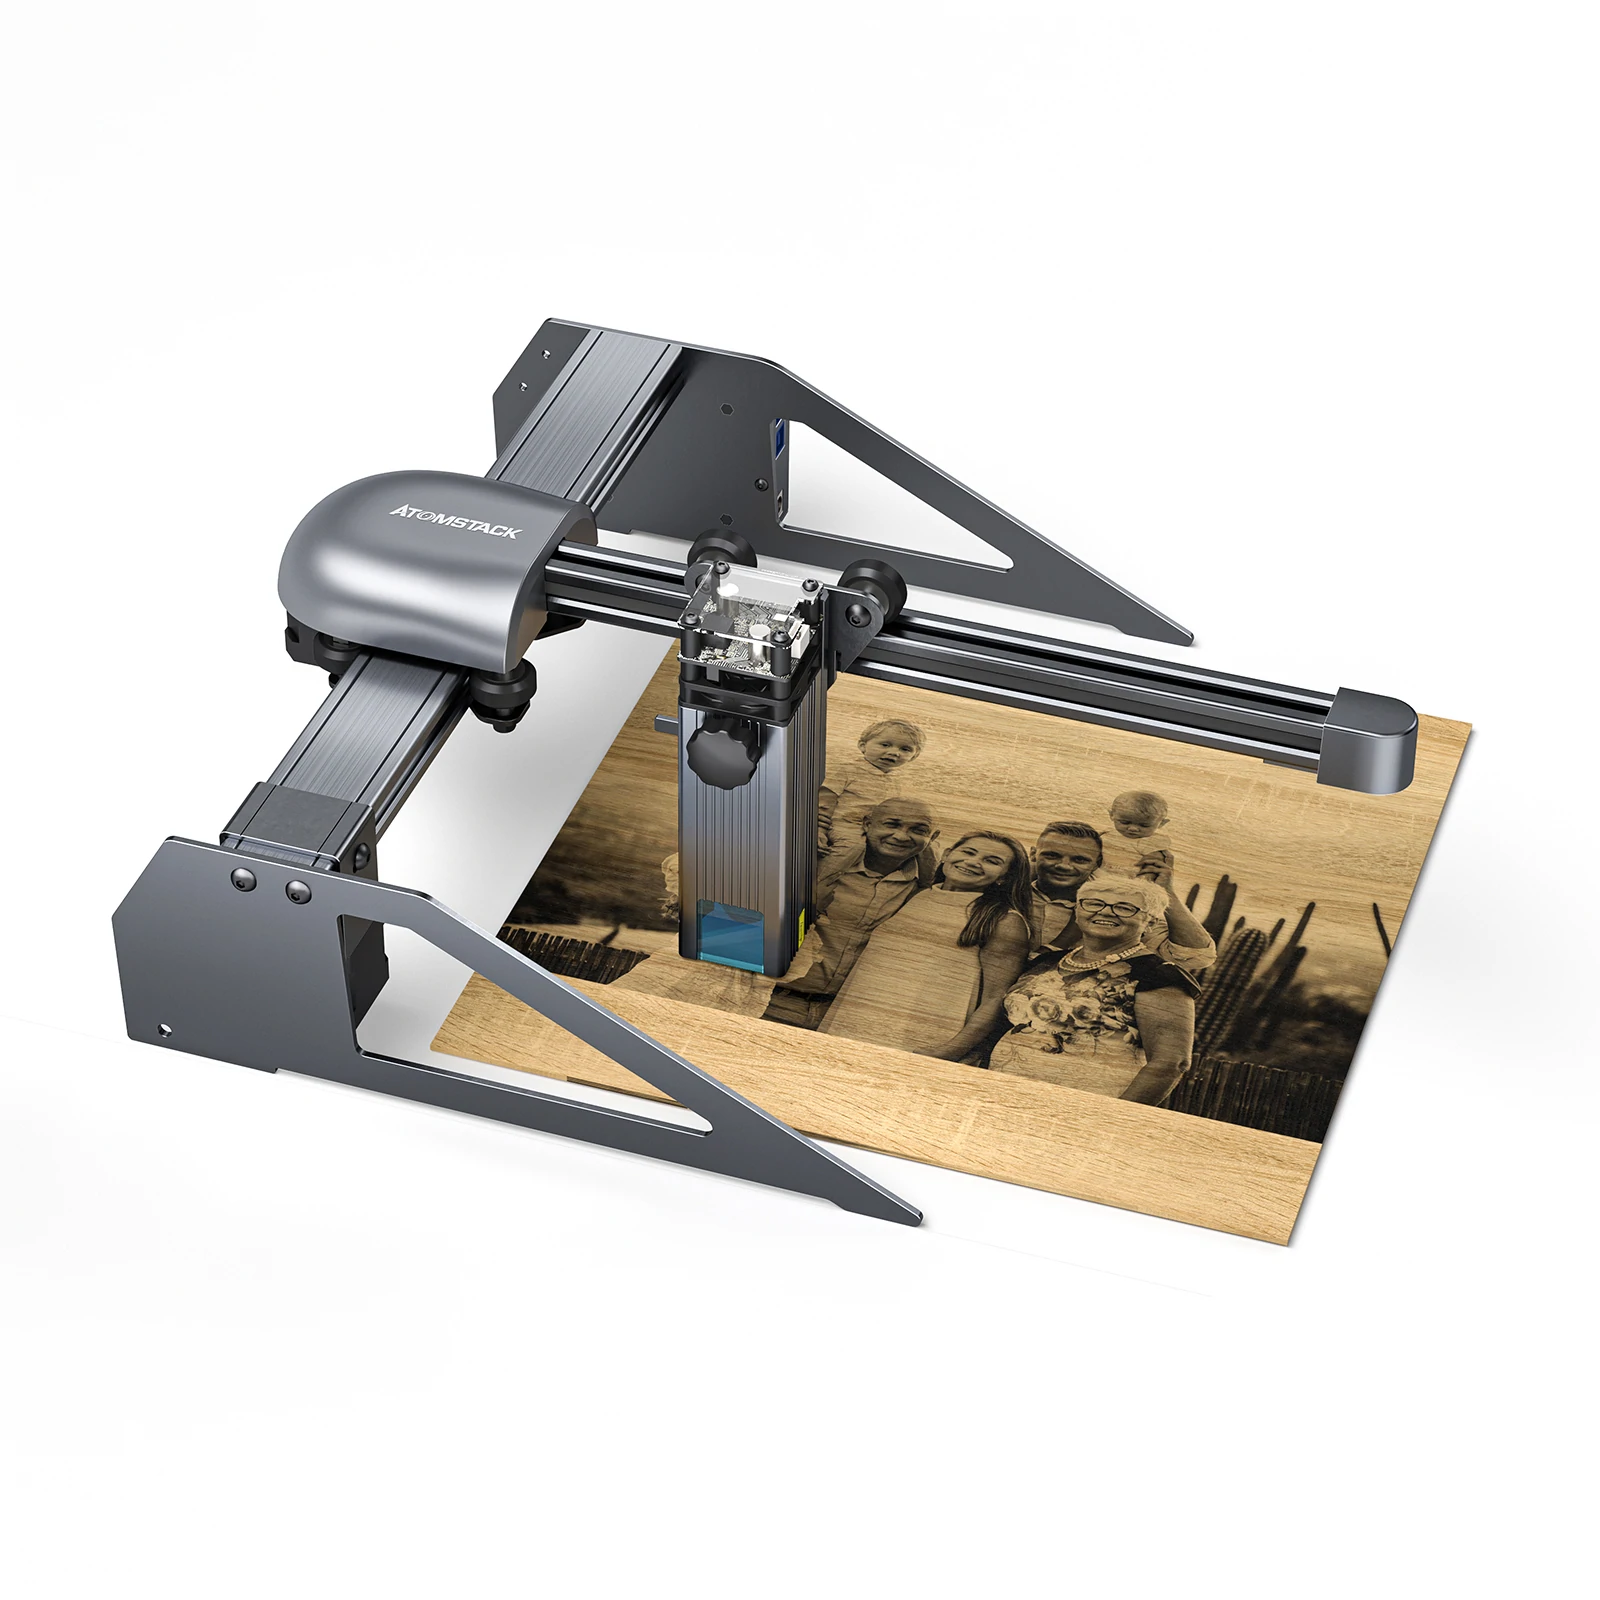 P7 M40 laser cutter engraver